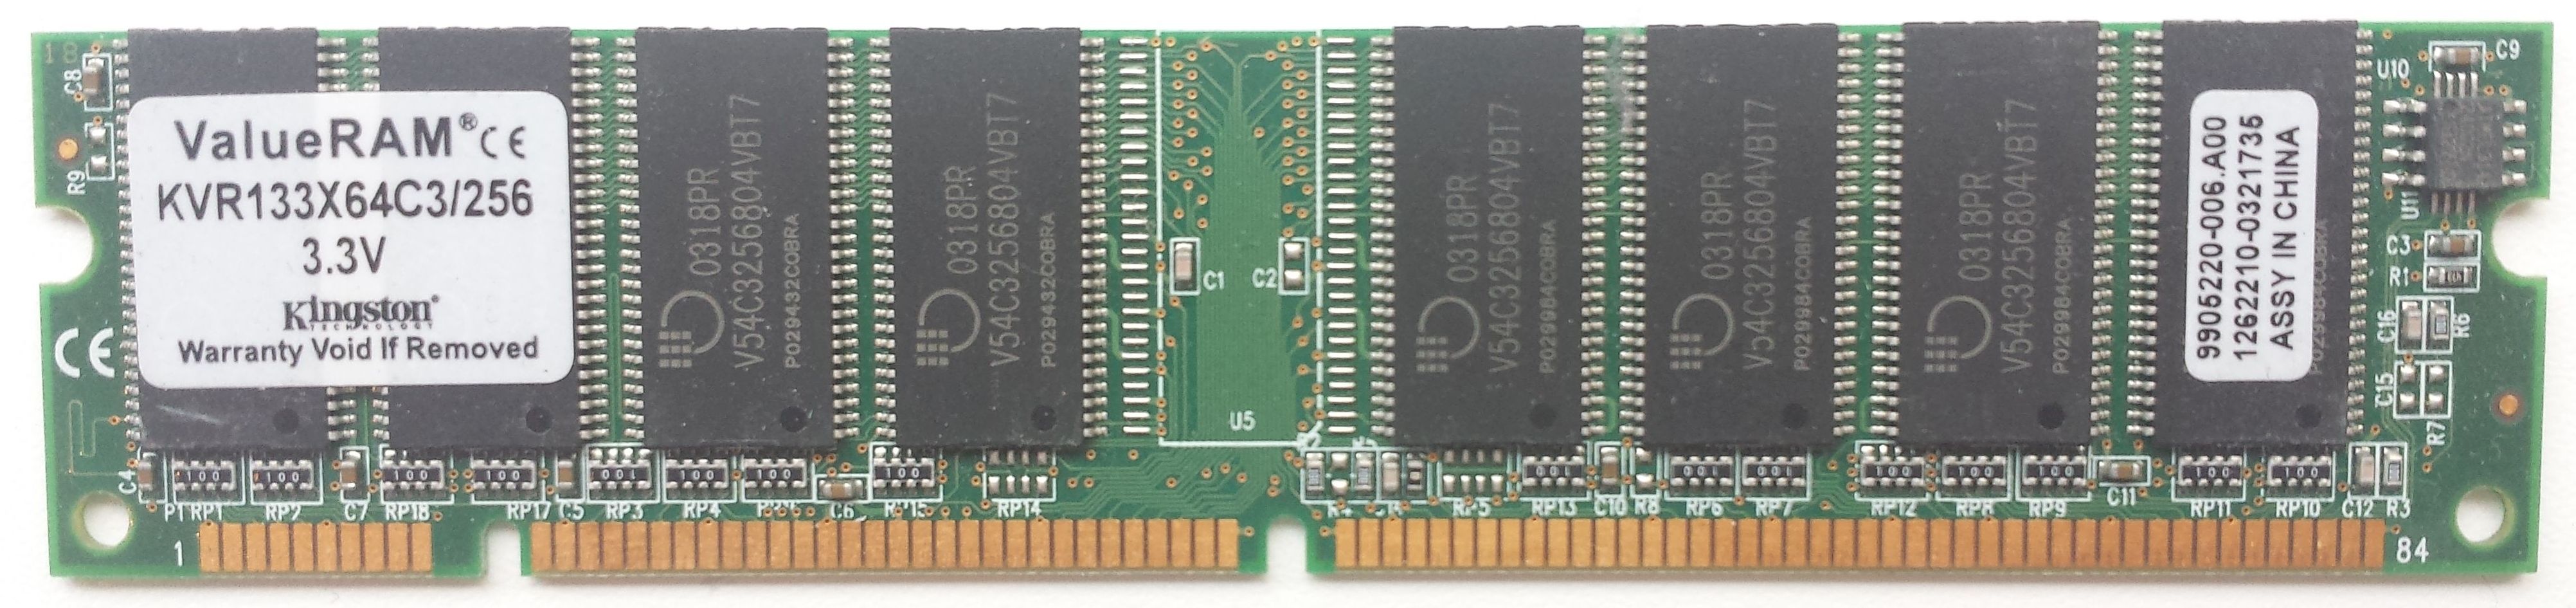 SDRAM 256MB 133Mhz / Kingston KVR133X64C3/256